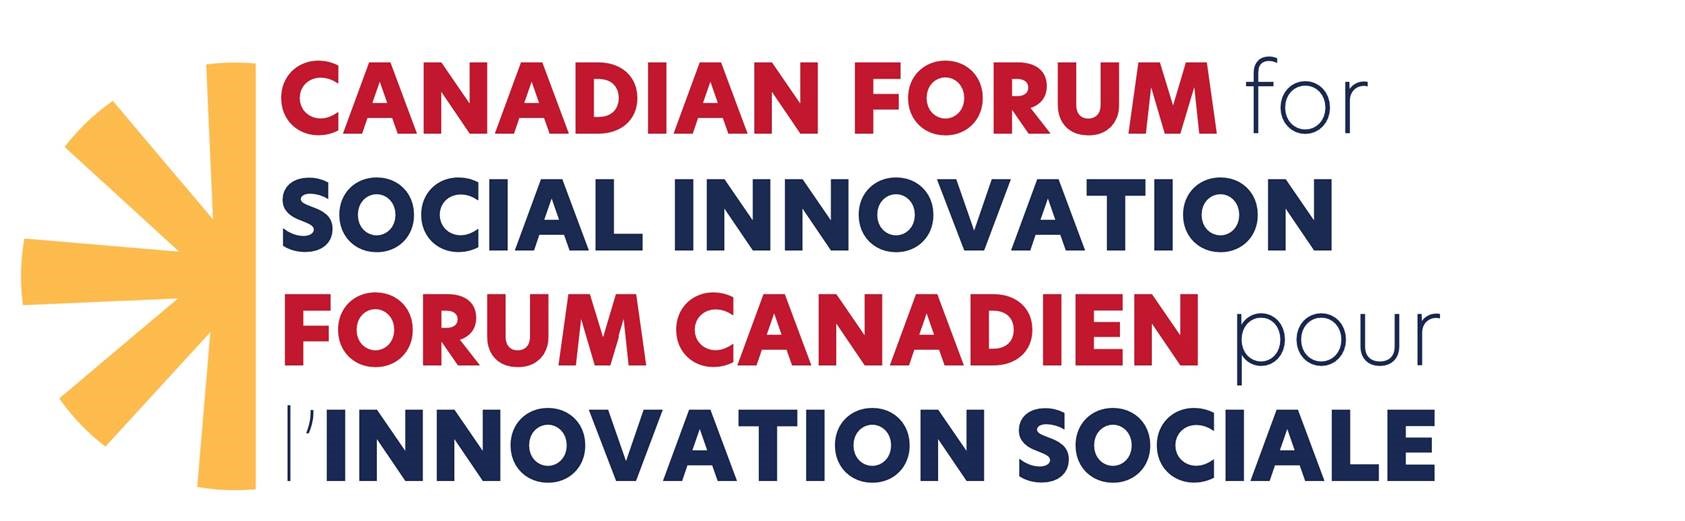 Canadian forum for social innovation / Forum canadien pour l'innovation sociale